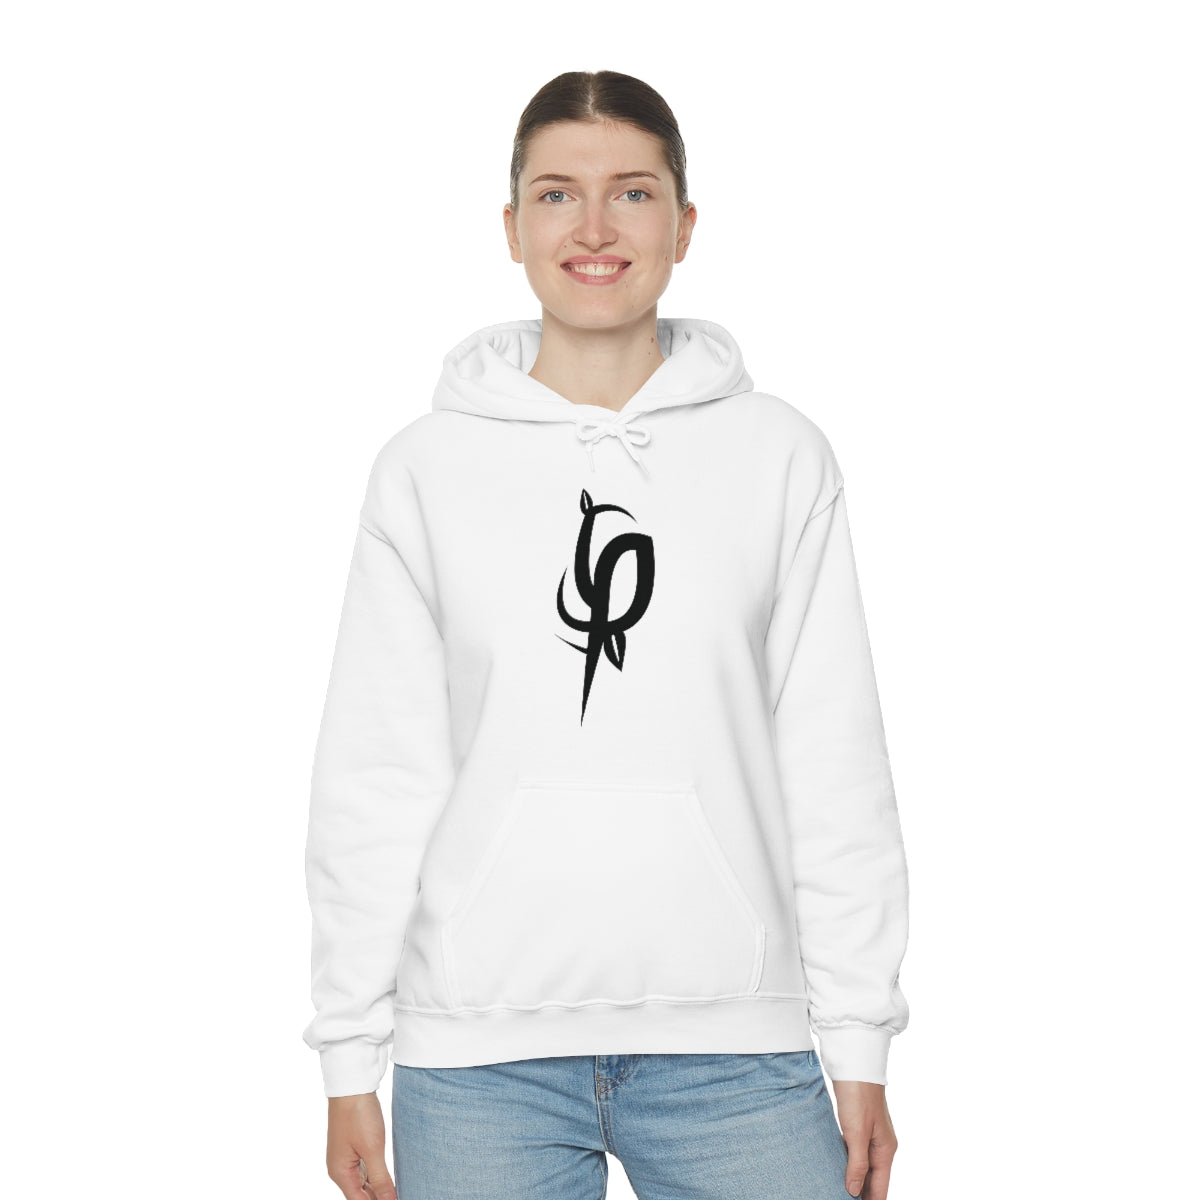 Promo Flourish$Prosper Logomark Hooded Sweatshirt